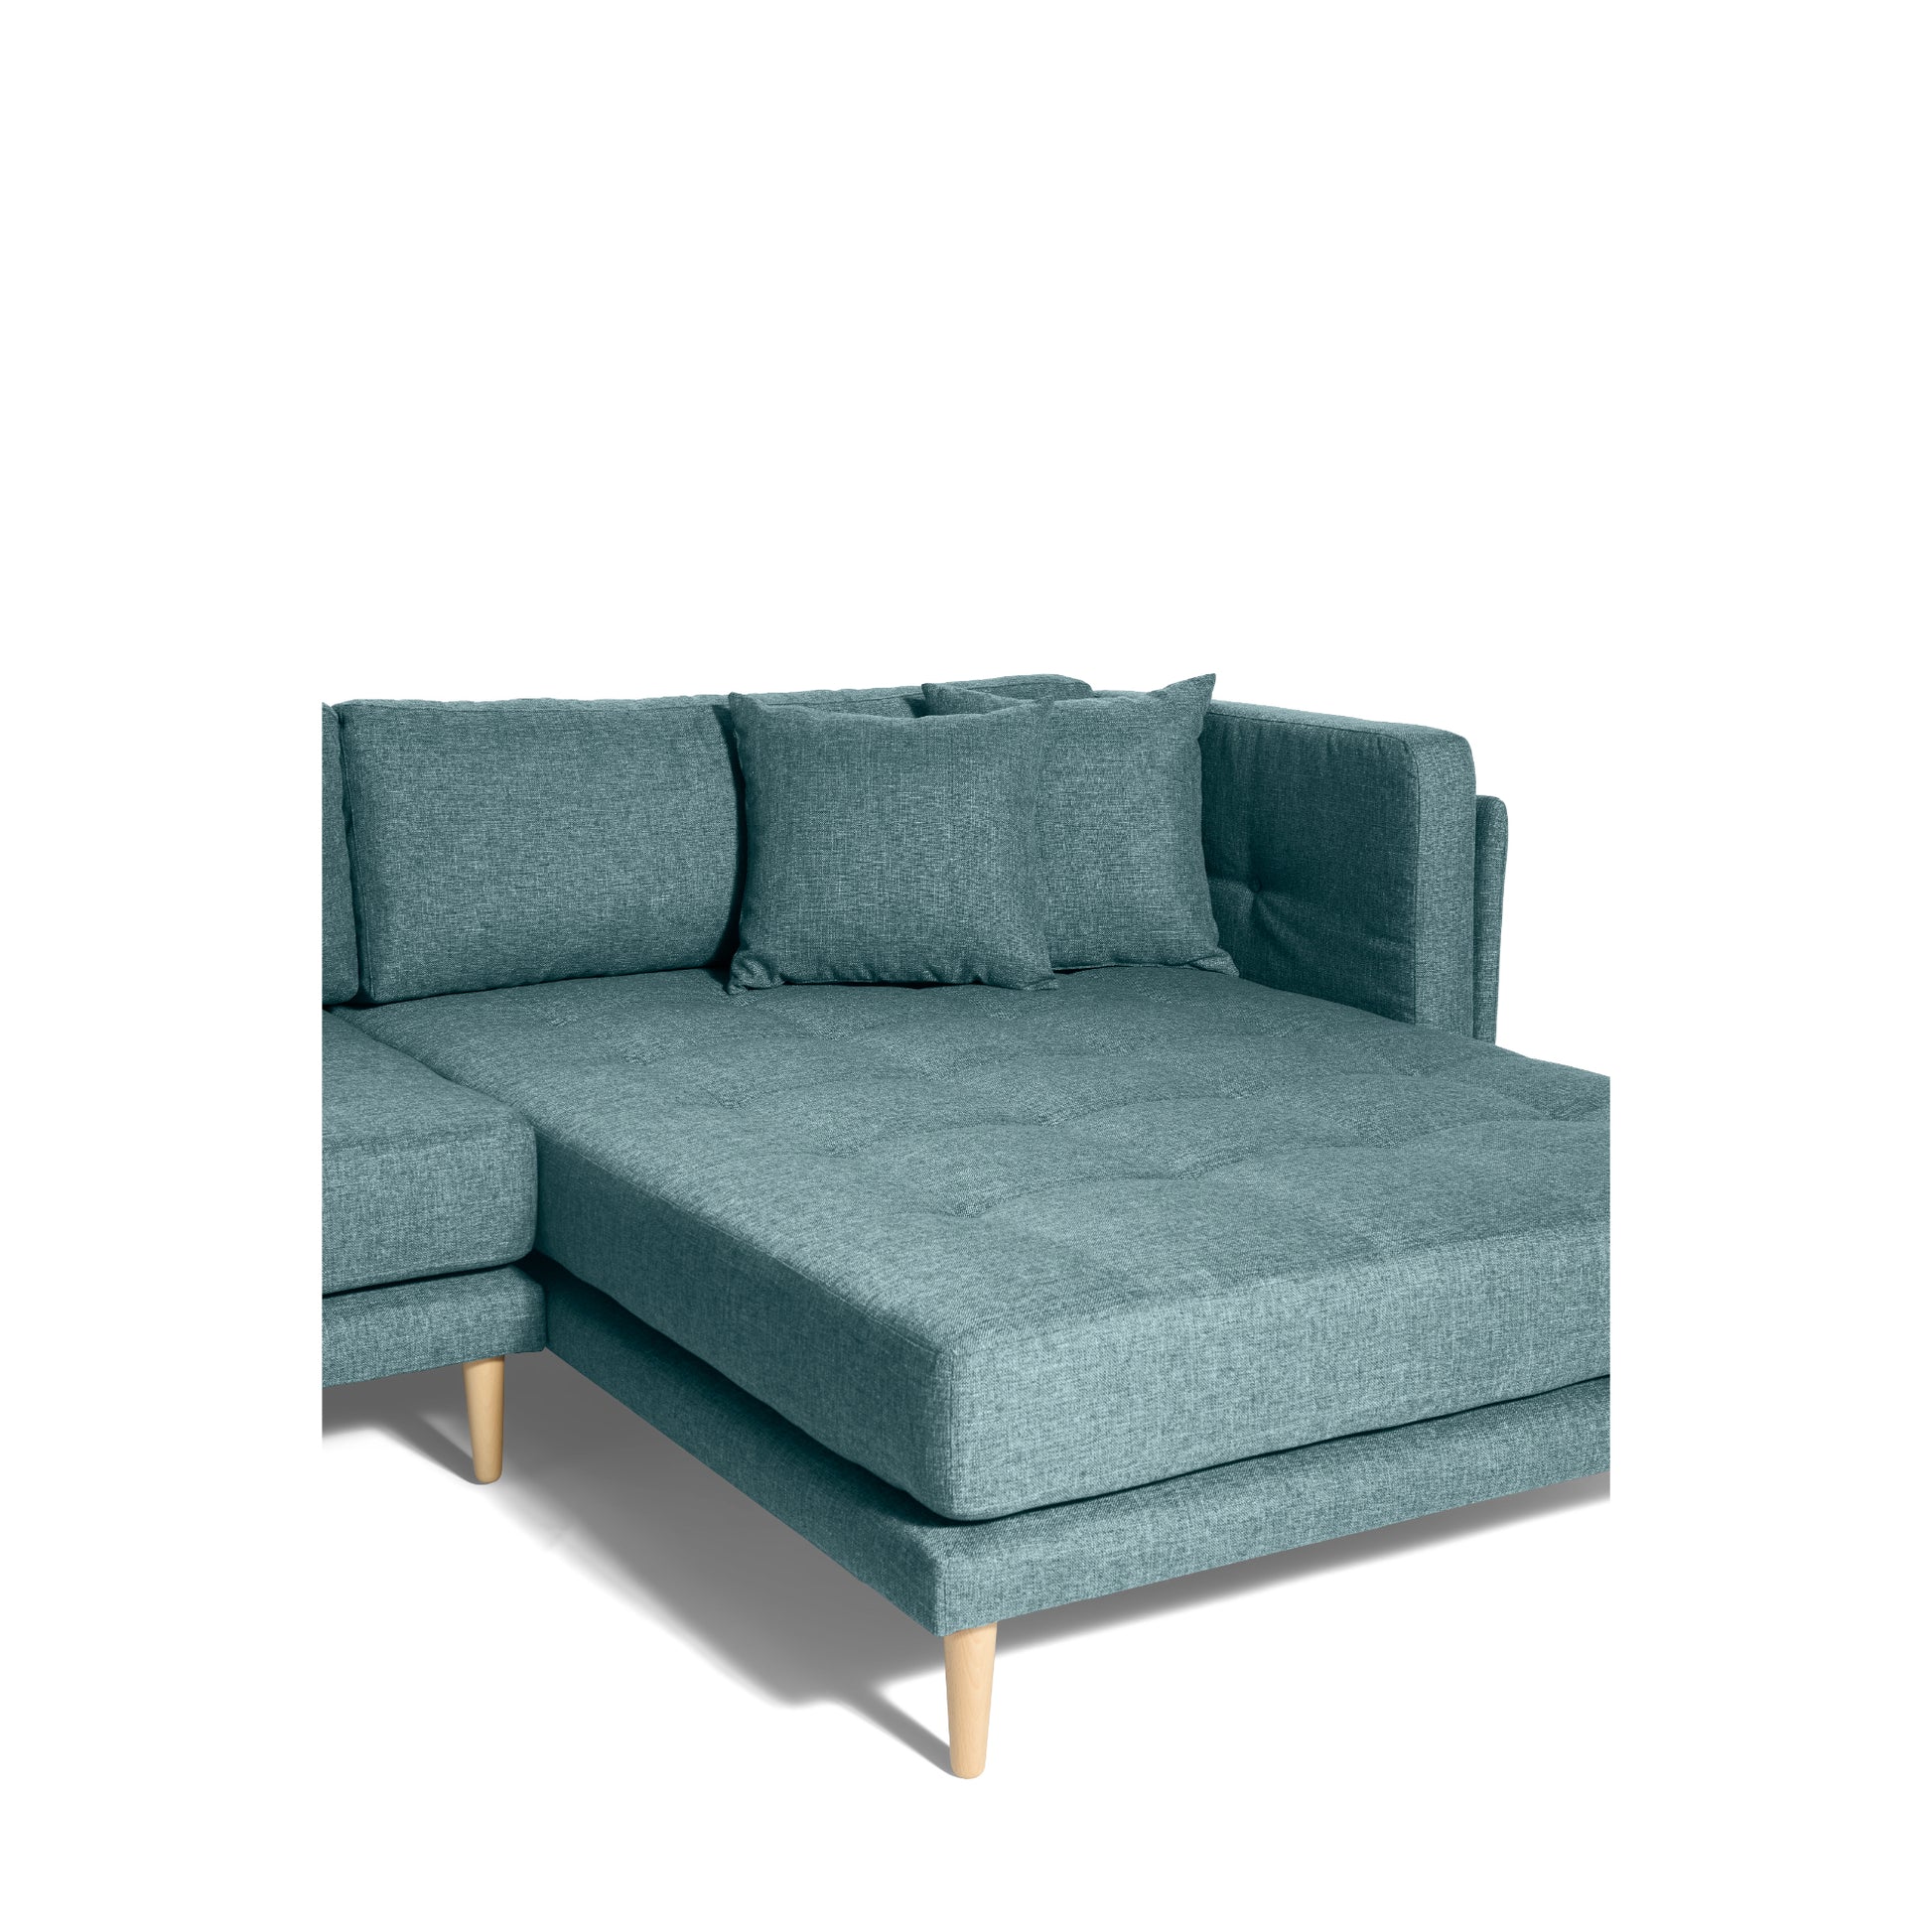 Cali højrevendt U-sofa - Møbelkompagniet